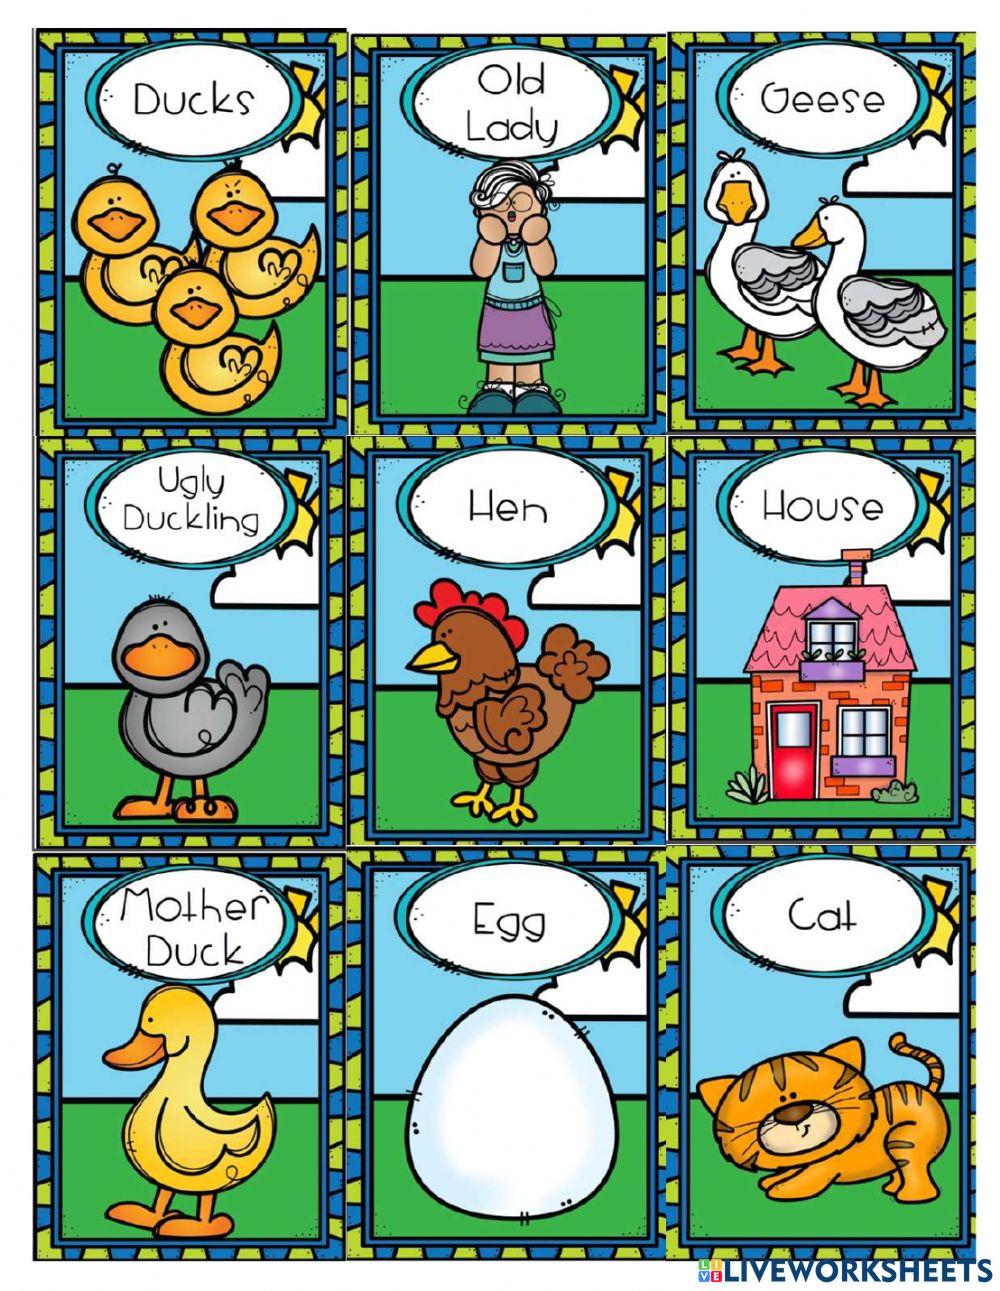 Ugly duckling bingo card 2